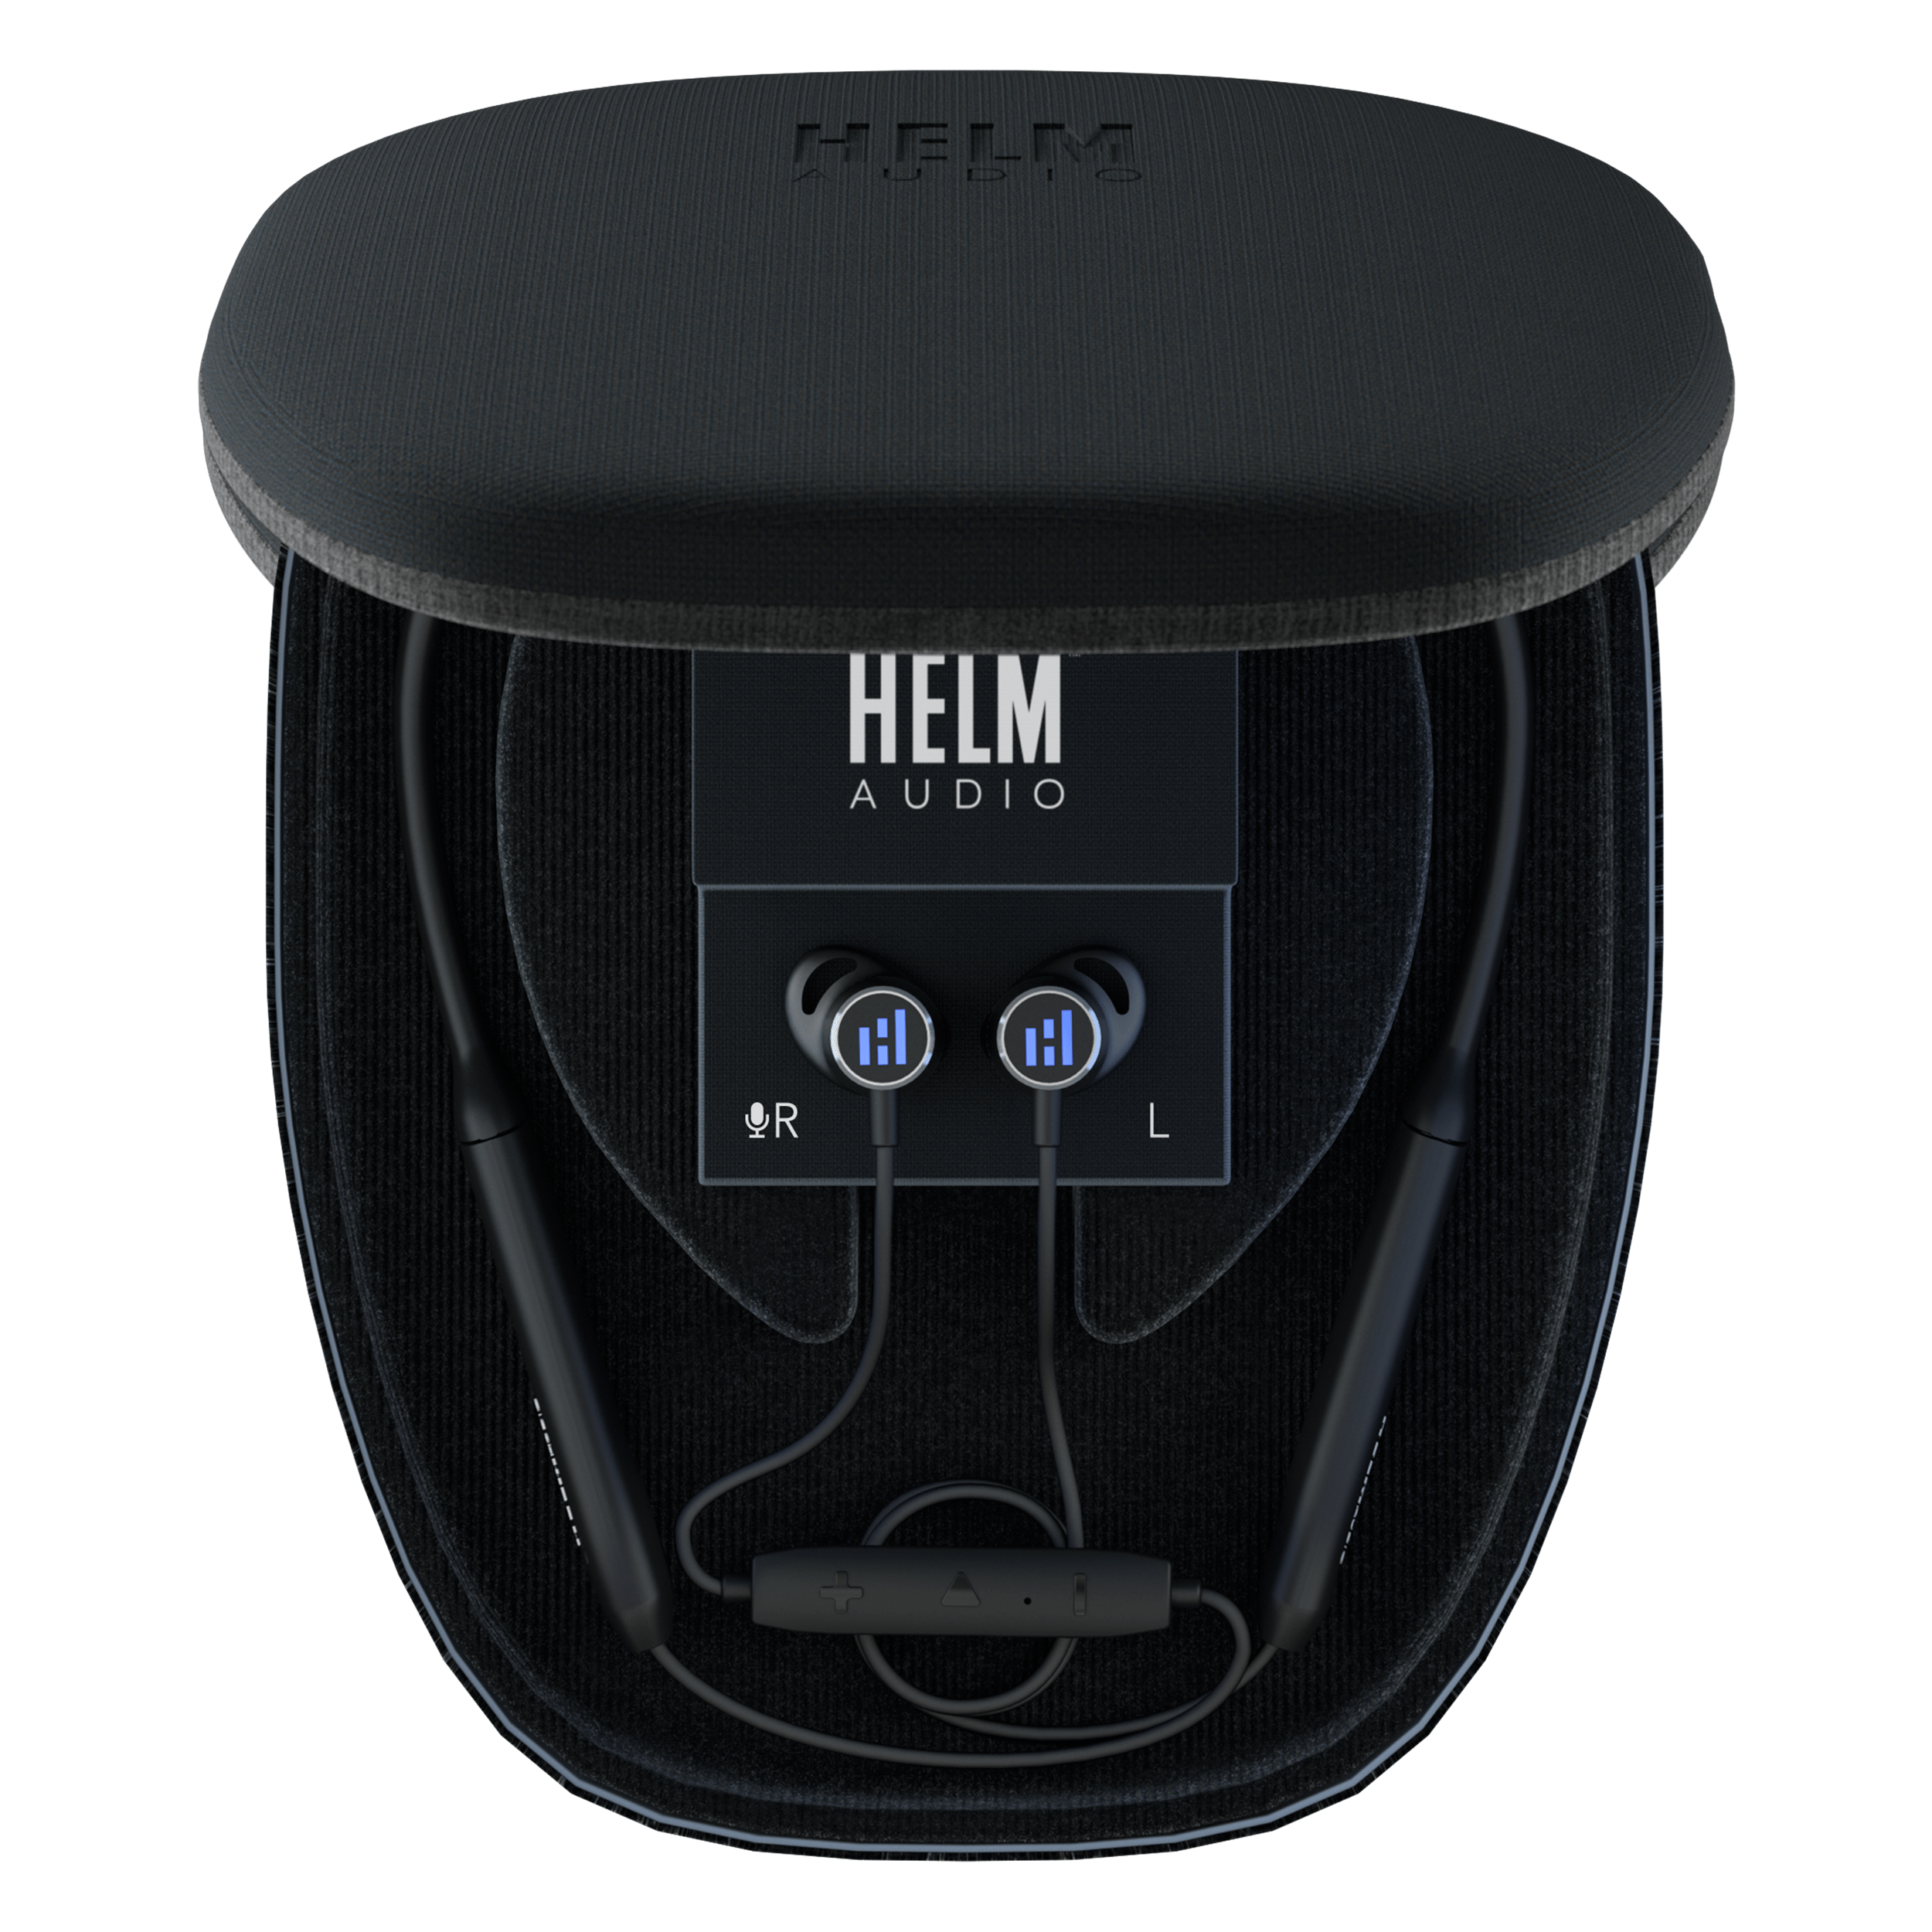 HELM Sportsband HD Triple Driver – Ultimate Lifestyle Headphones